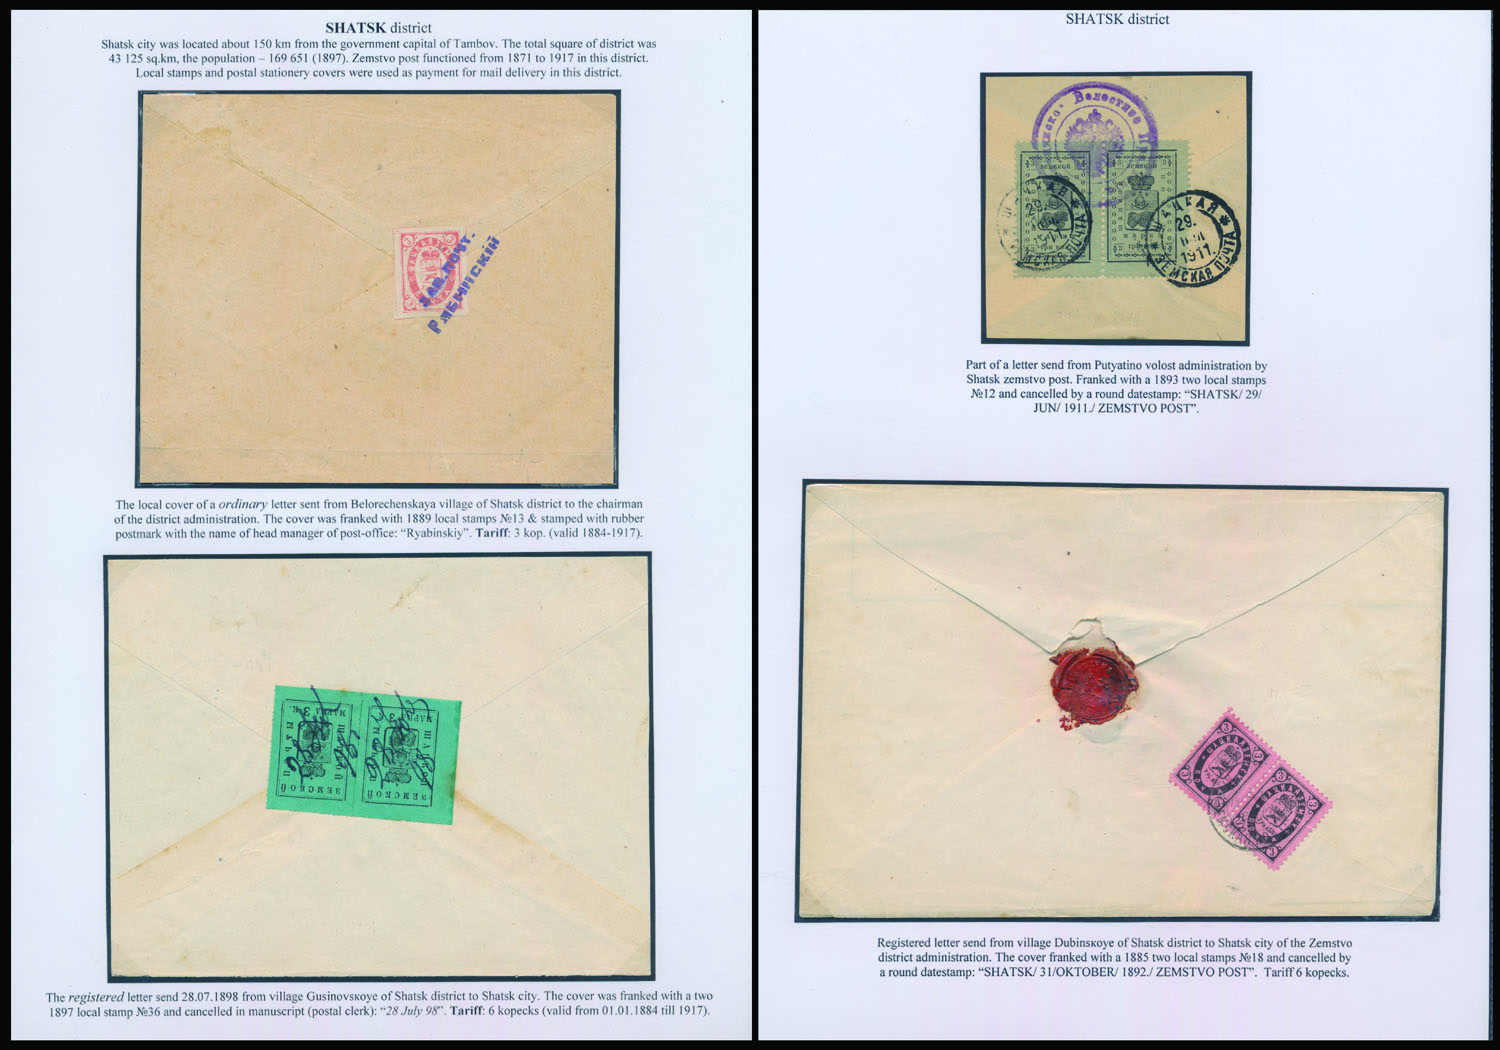 Lot 2002 - russian zemstvo (rural post) locals Shatsk - Postal History Unit -  Raritan Stamps Inc. Live Bidding Auction #77, March 2-3, 2018.